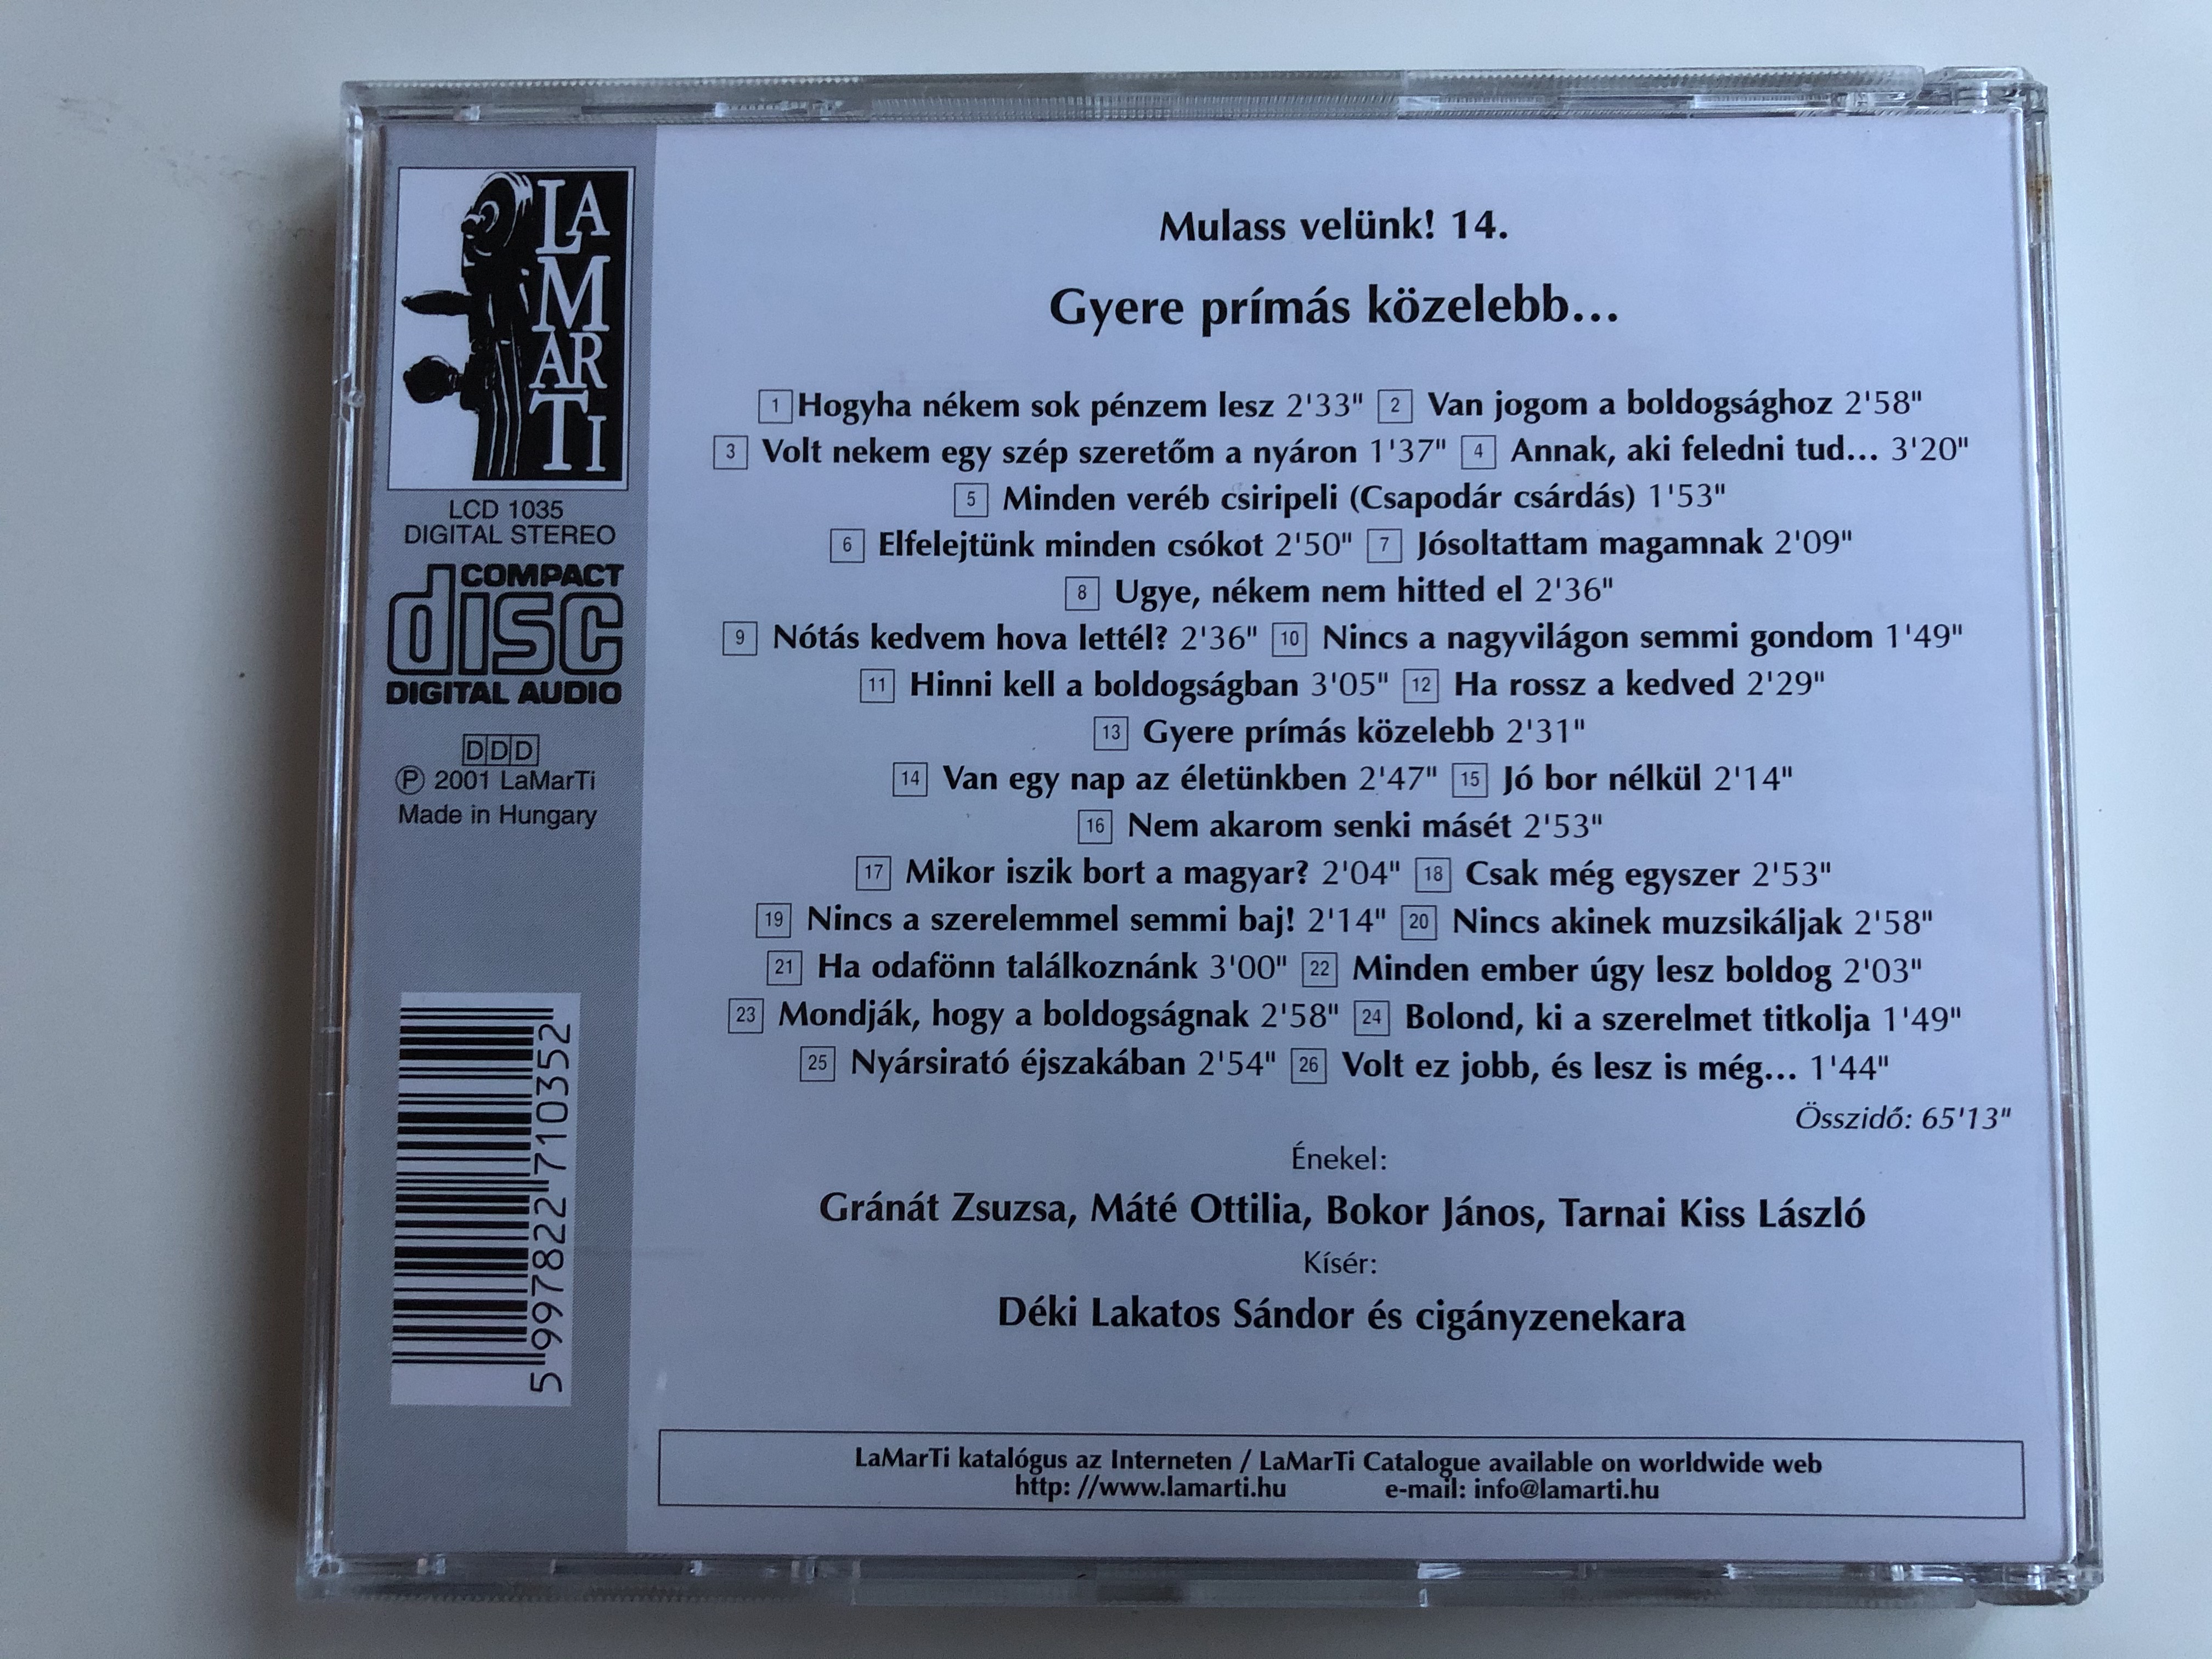 gyere-pr-m-s-k-zelebb-hungarian-songs-gr-n-t-zsuzsa-m-t-ott-lia-bokor-j-nos-tarnai-kiss-l-szl-d-ki-lakatos-s-ndor-es-ciganyzenekara-lamarti-audio-cd-2001-stereo-lcd-1035-7-.jpg